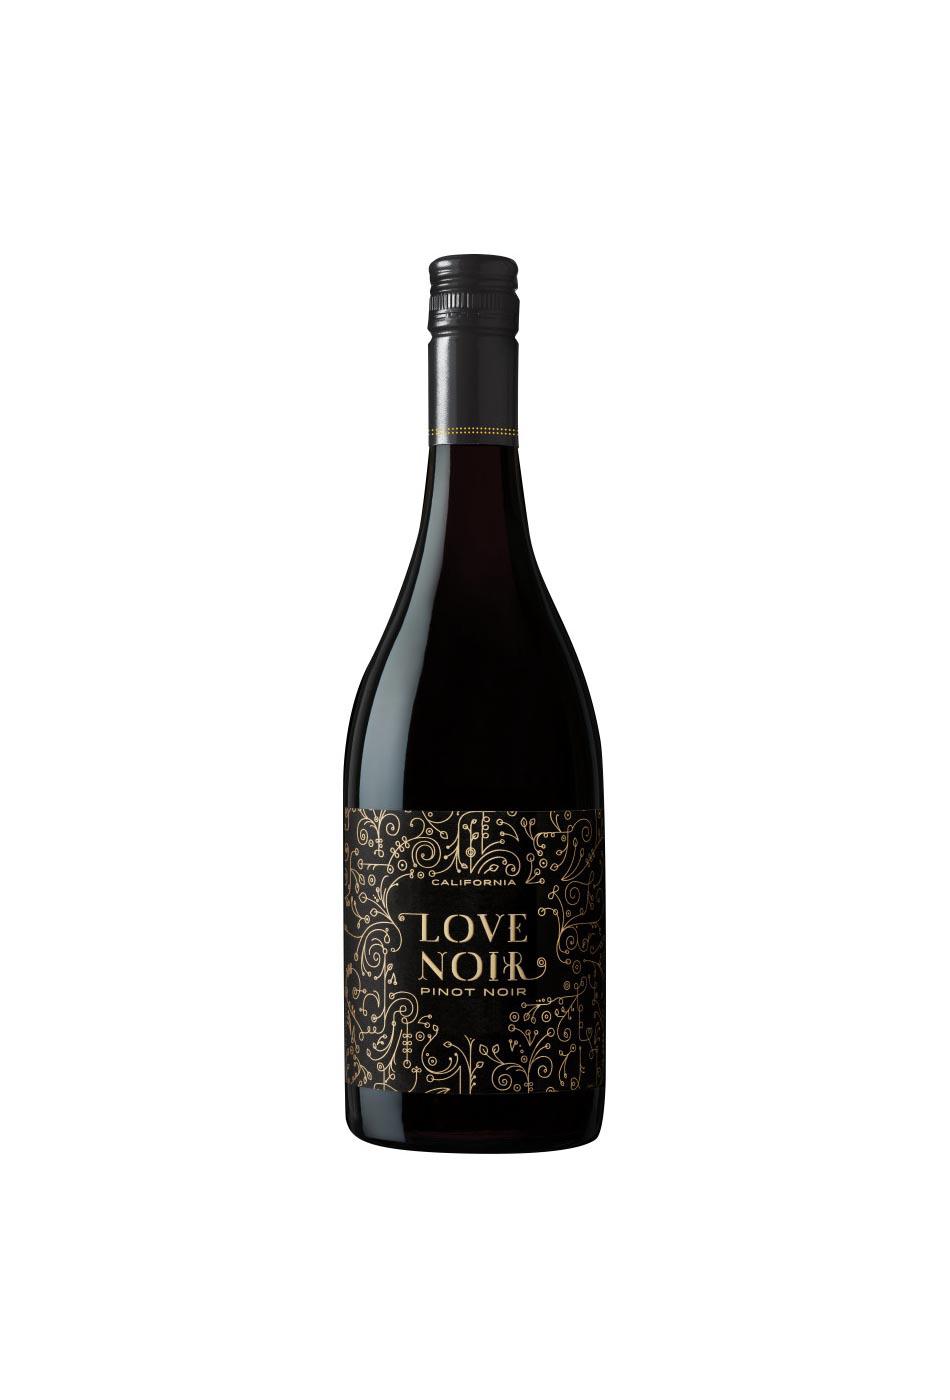 Love Noir Pinot Noir Red Wine; image 1 of 2